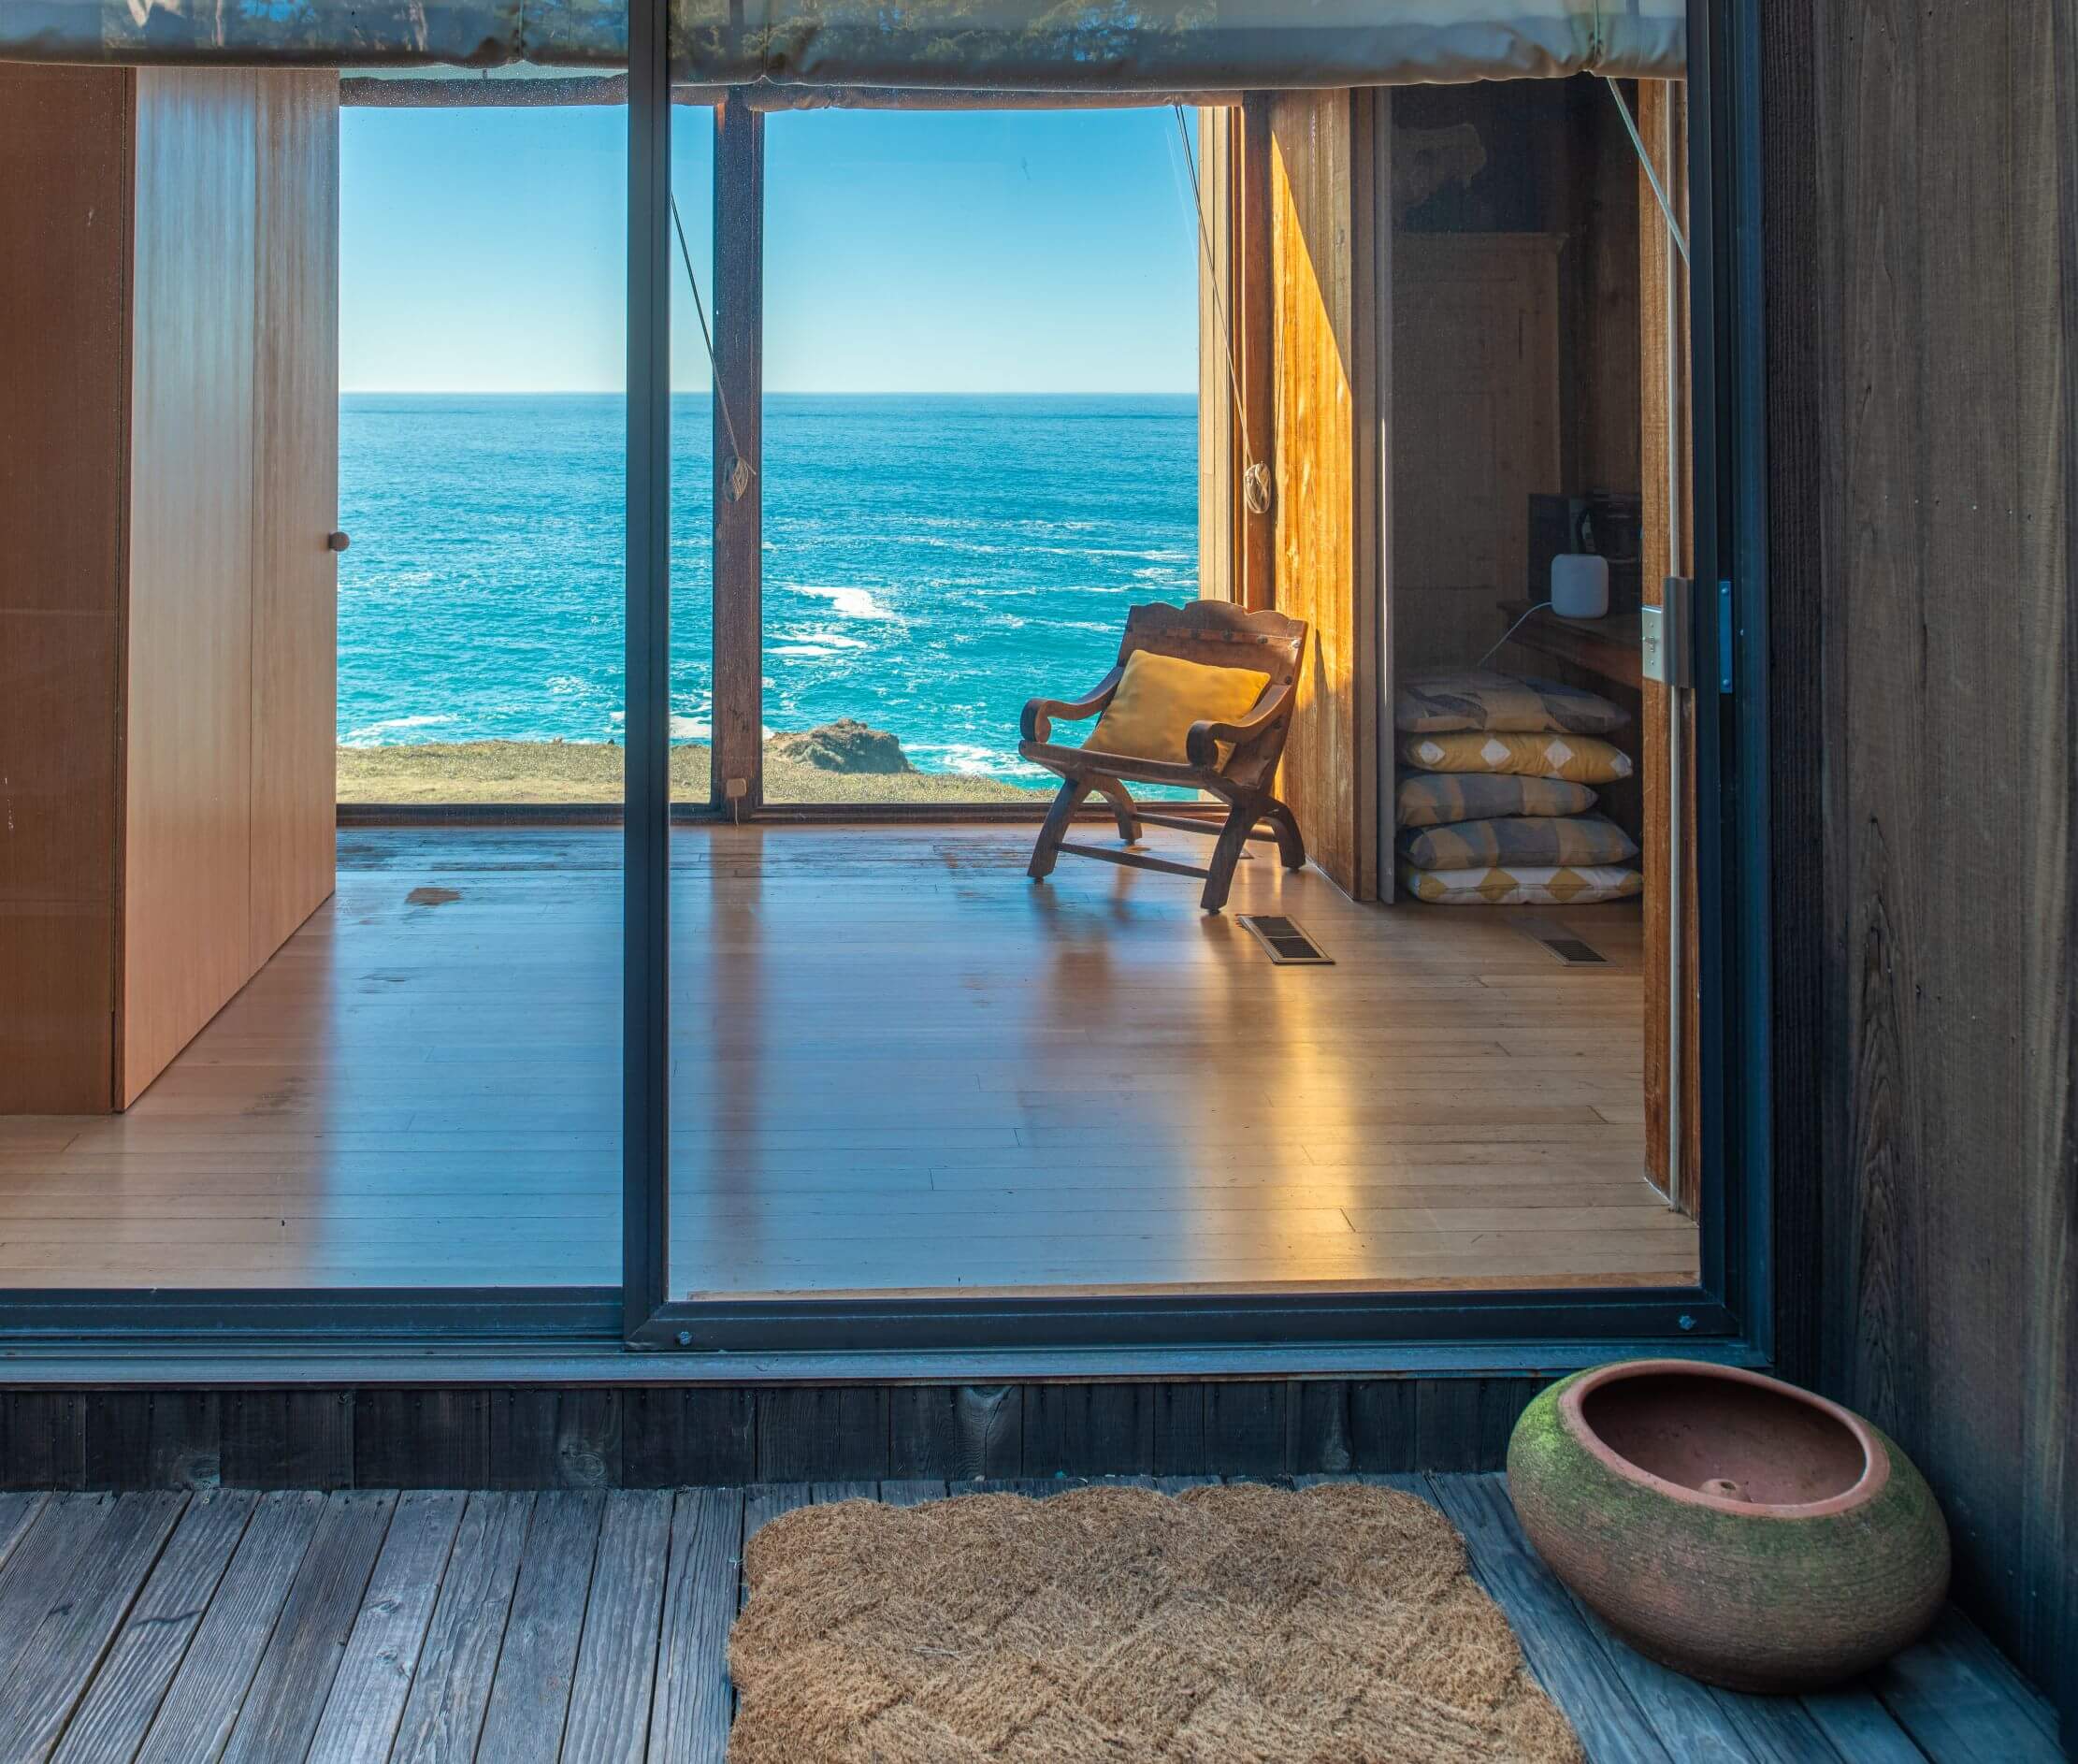 Moore Condo #9 - outdoor exterior entryway looking into large window and view of ocean.